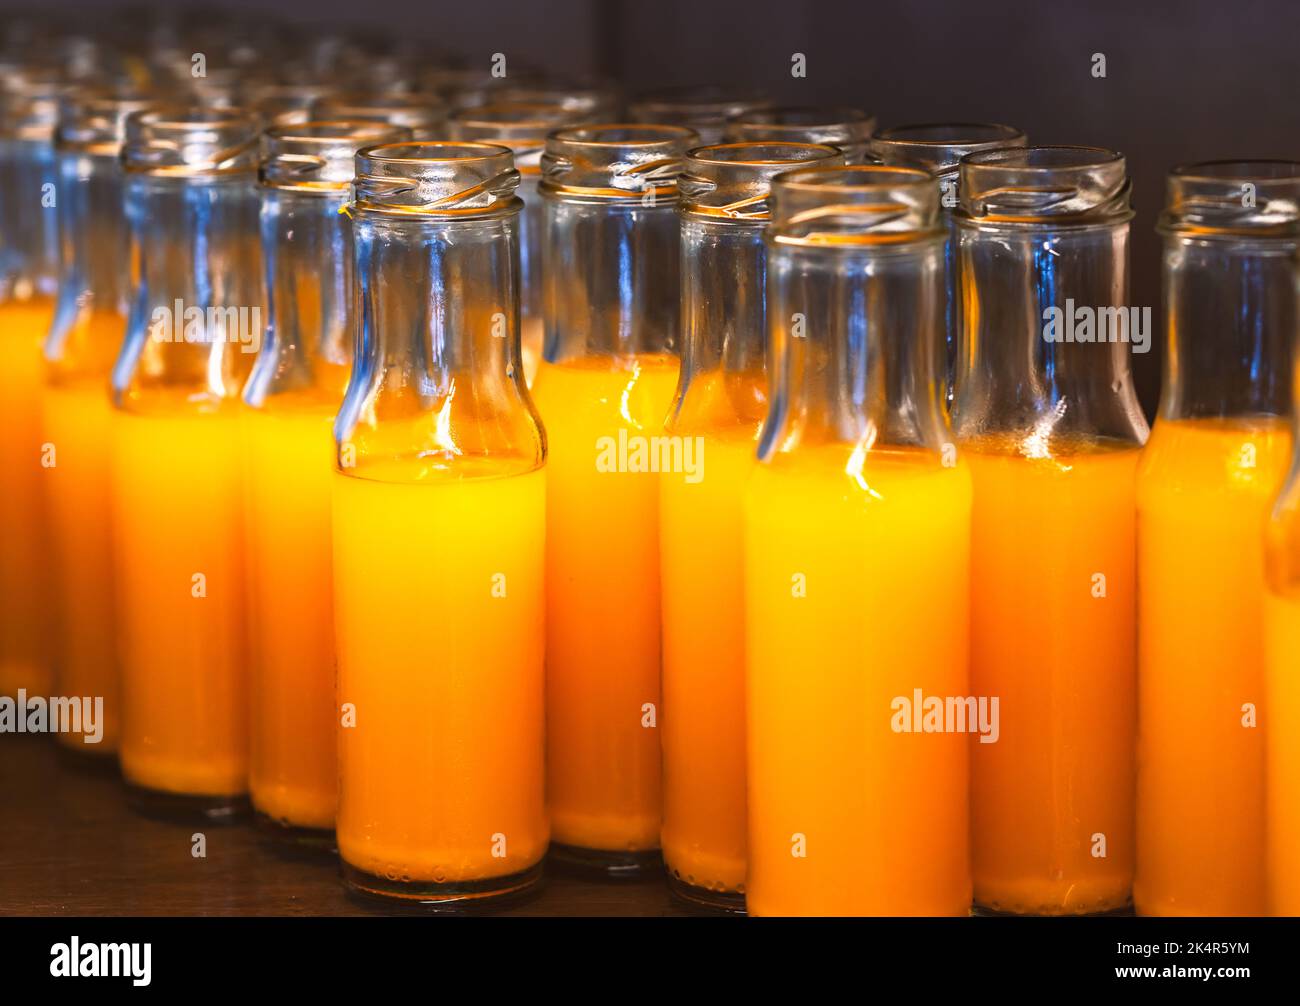 https://c8.alamy.com/comp/2K4R5YM/close-up-group-of-fresh-orange-juice-in-small-glass-bottles-cold-fresh-orange-juice-in-glass-containers-on-a-stainless-steel-shelf-2K4R5YM.jpg